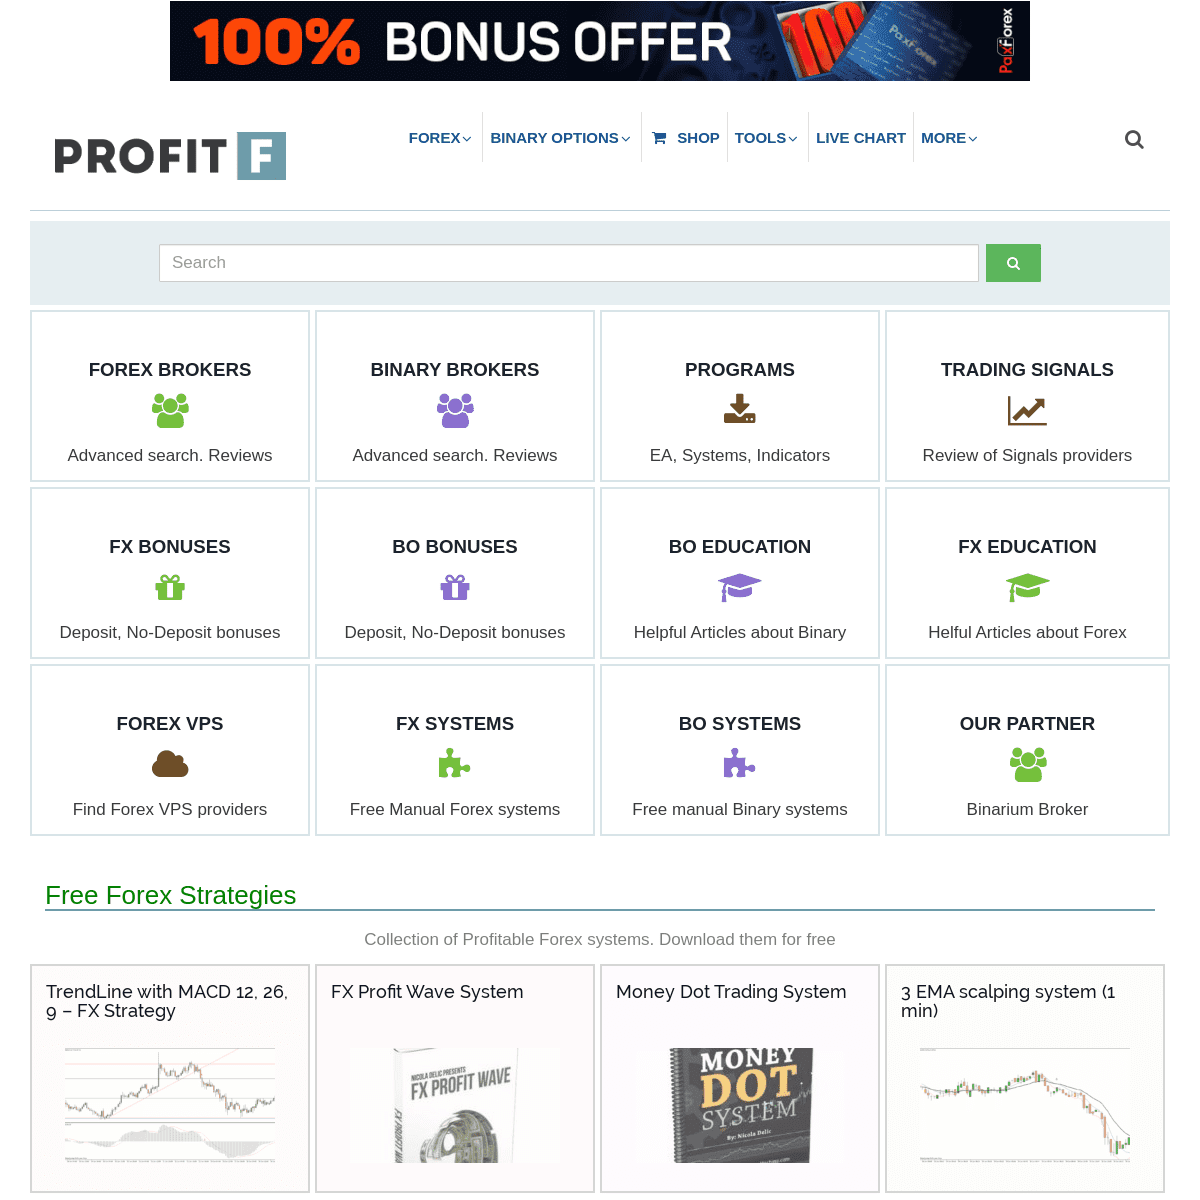 A complete backup of profitf.com